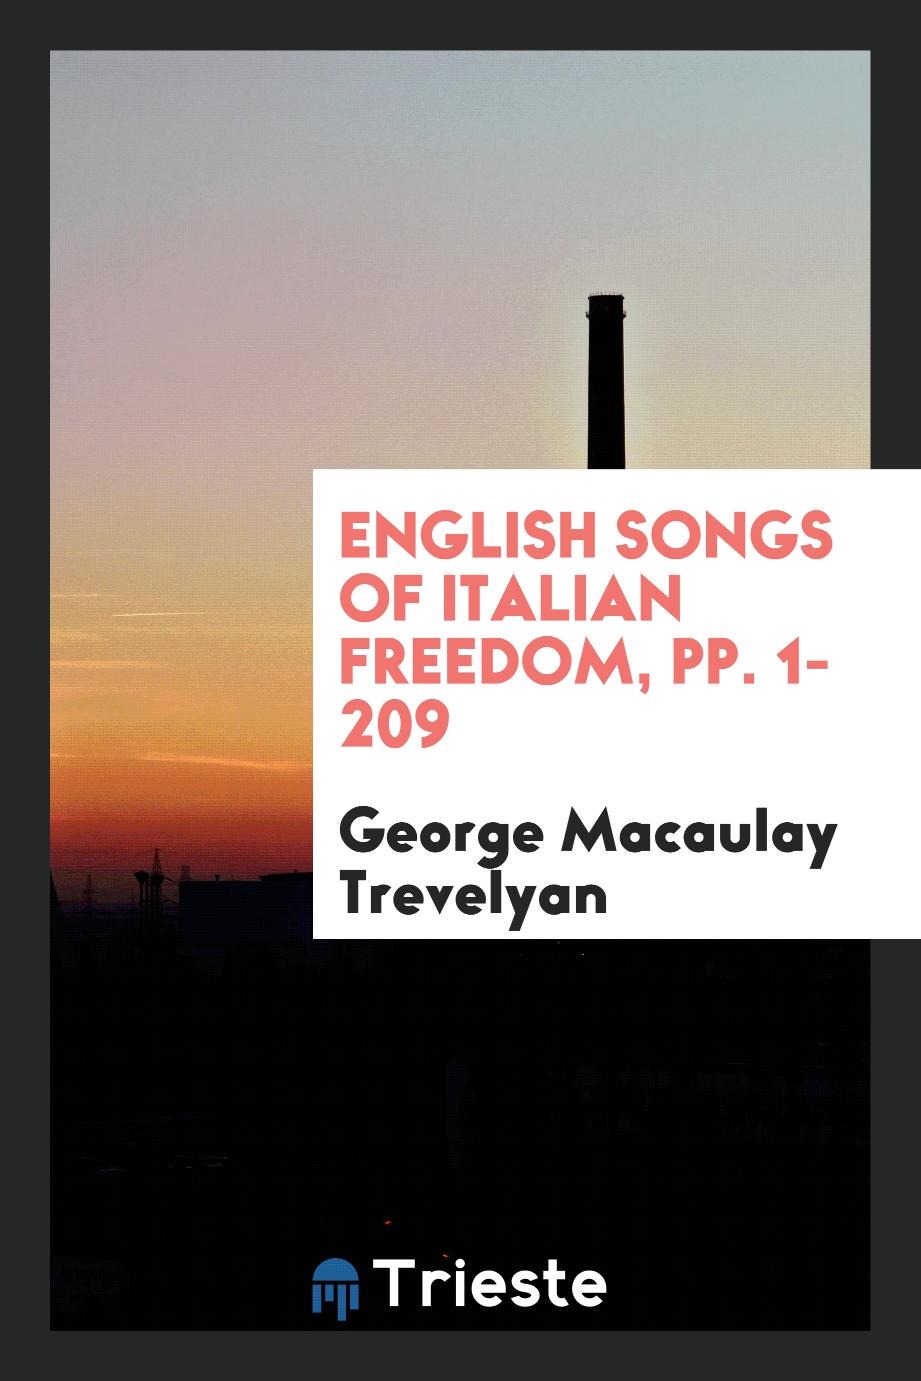 George Macaulay Trevelyan - English Songs of Italian Freedom, pp. 1-209